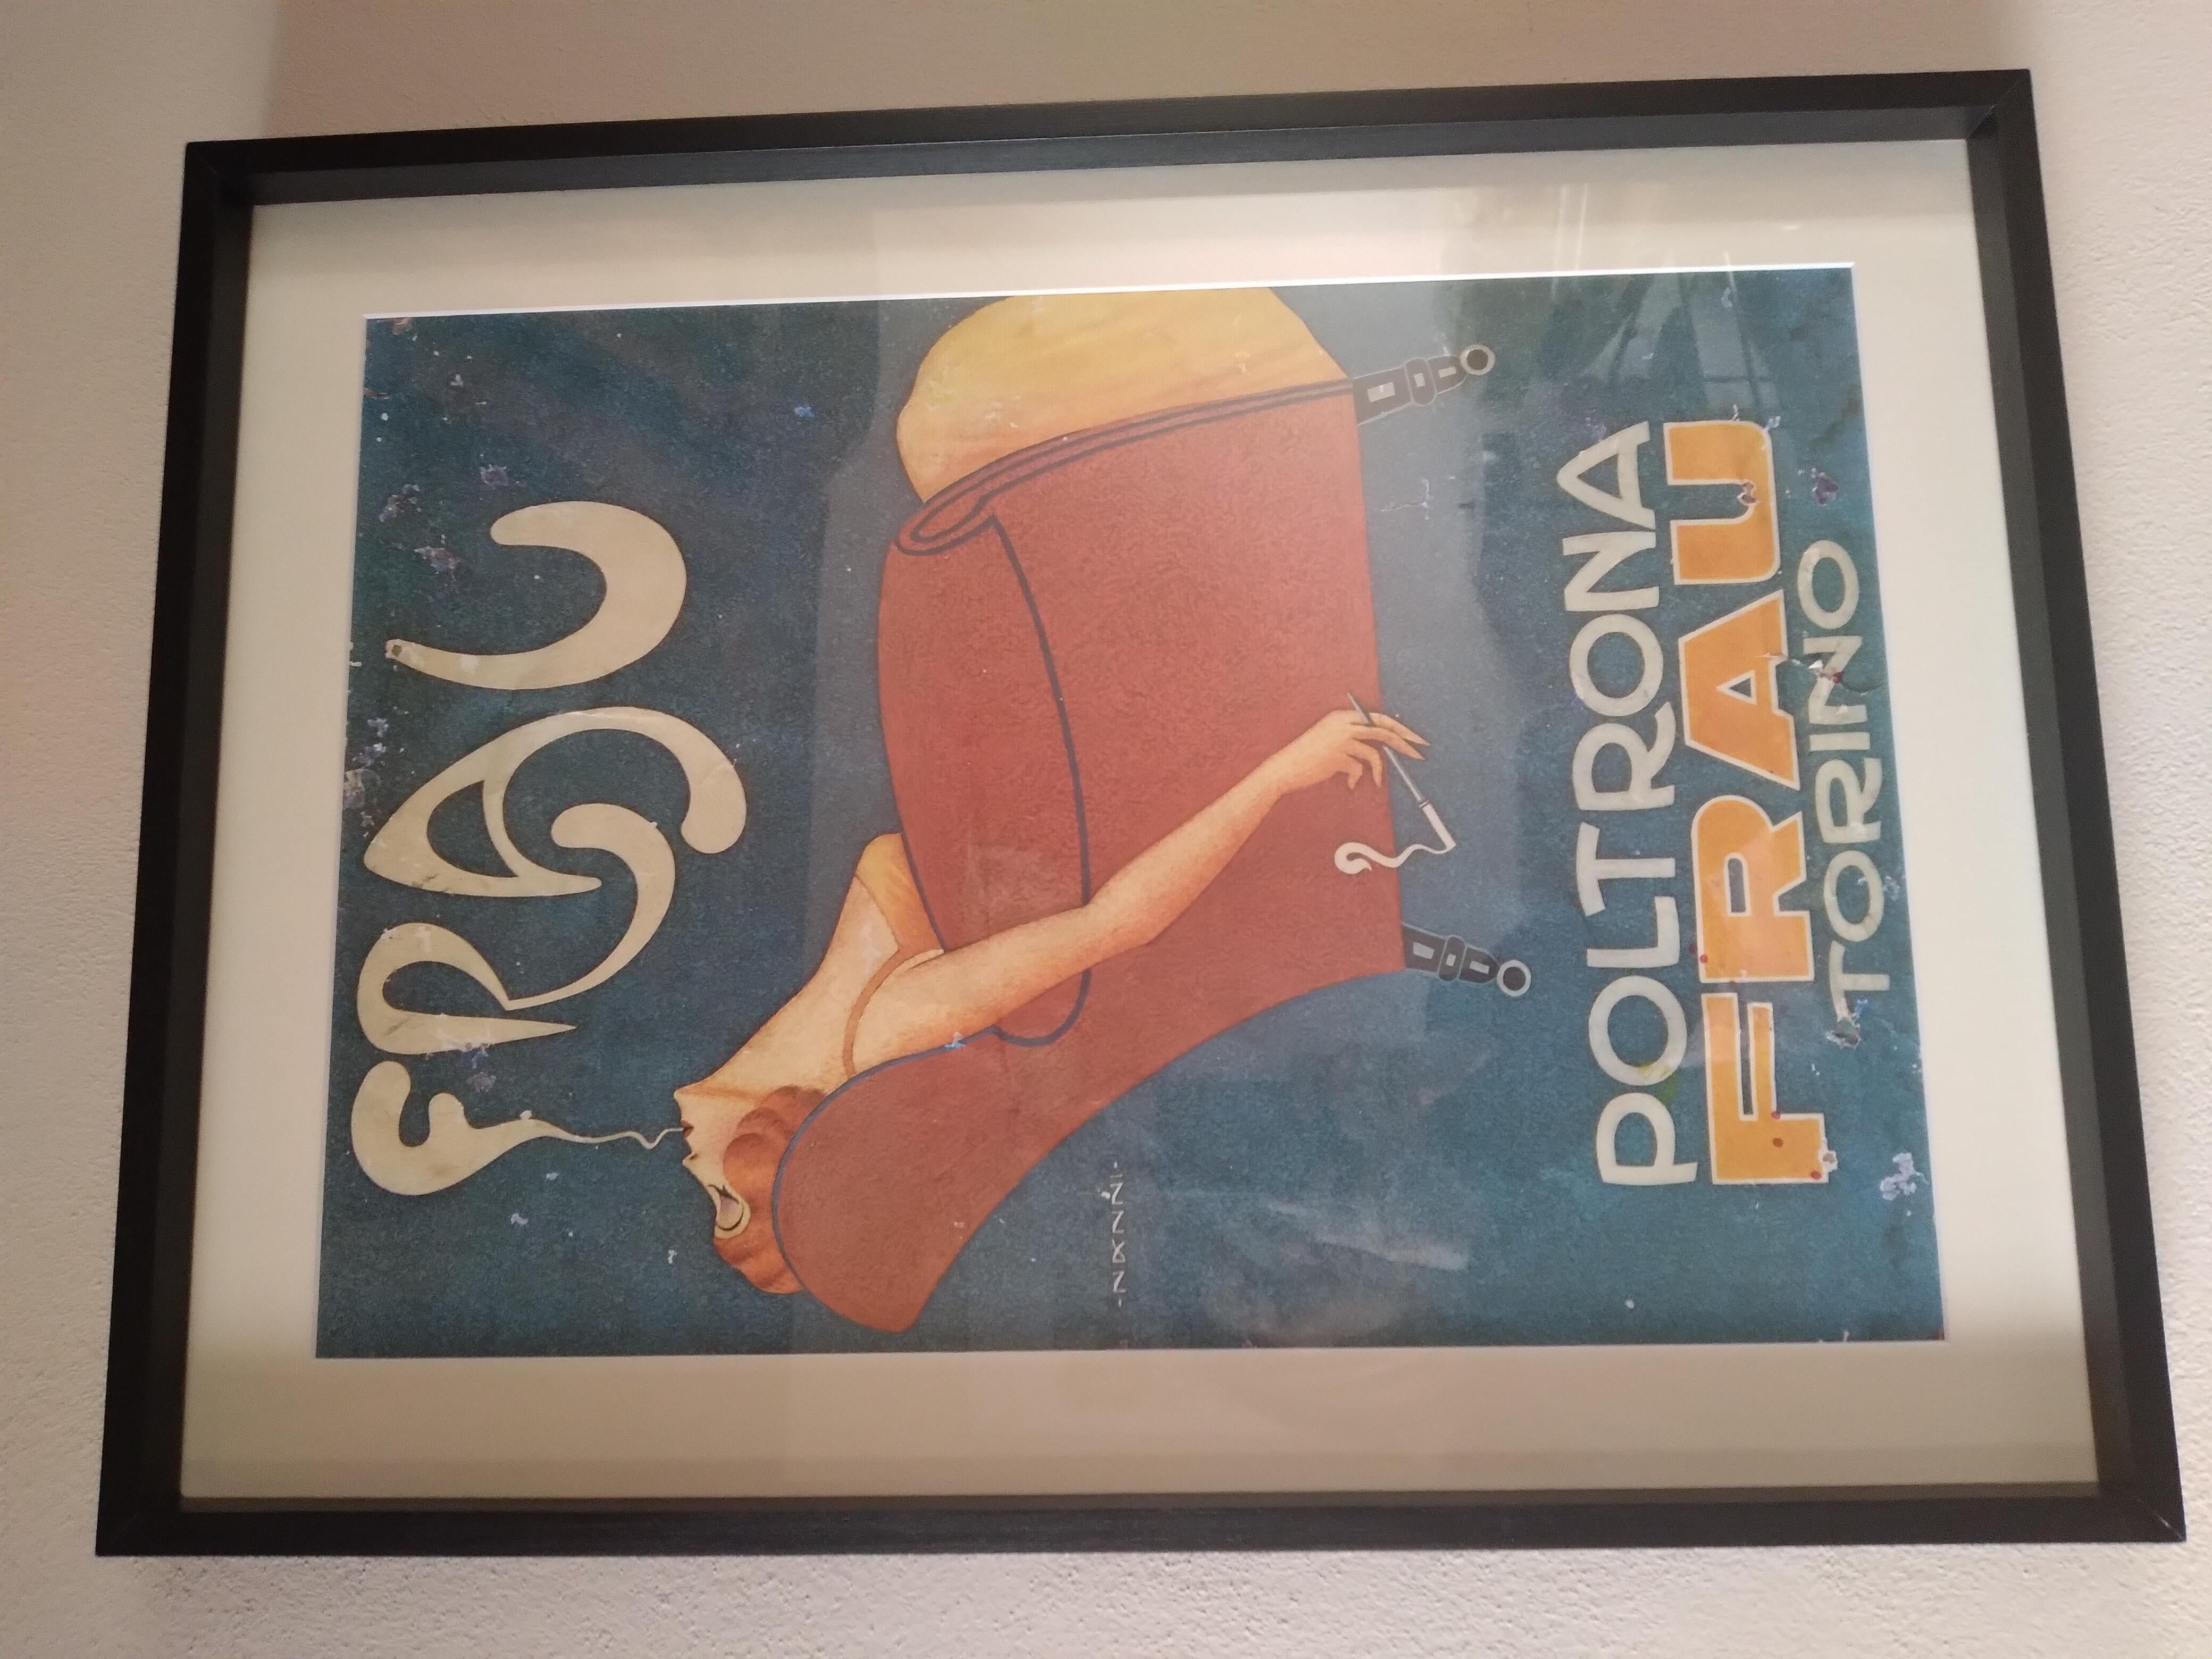 Italian Poltrona Frau Advertising Poster  For Sale